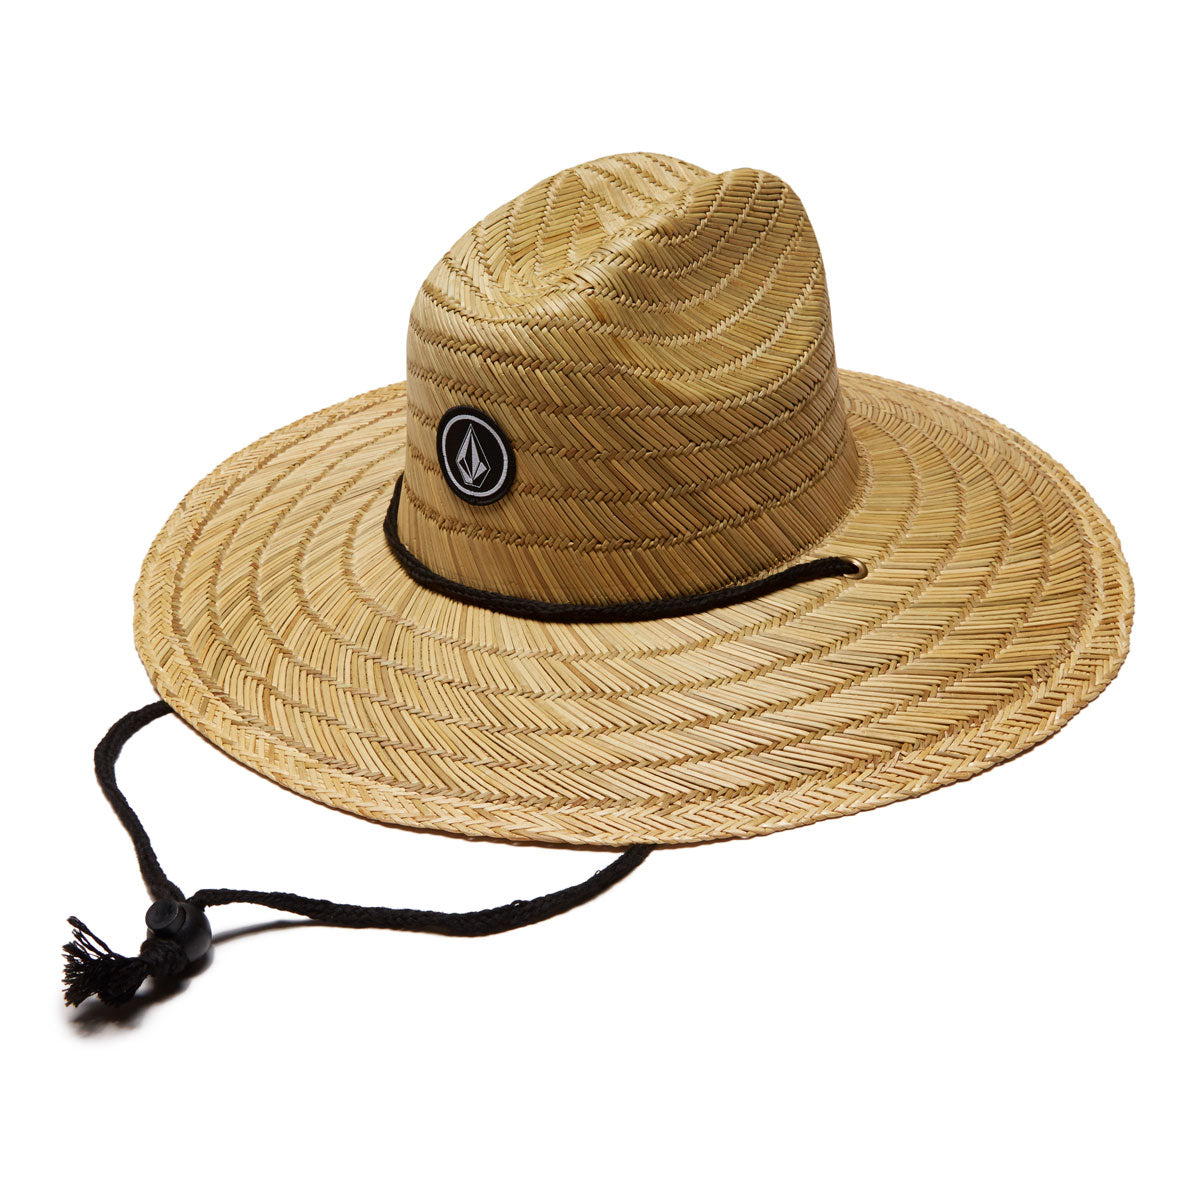 Volcom Quarter Straw Hat - Natural image 1